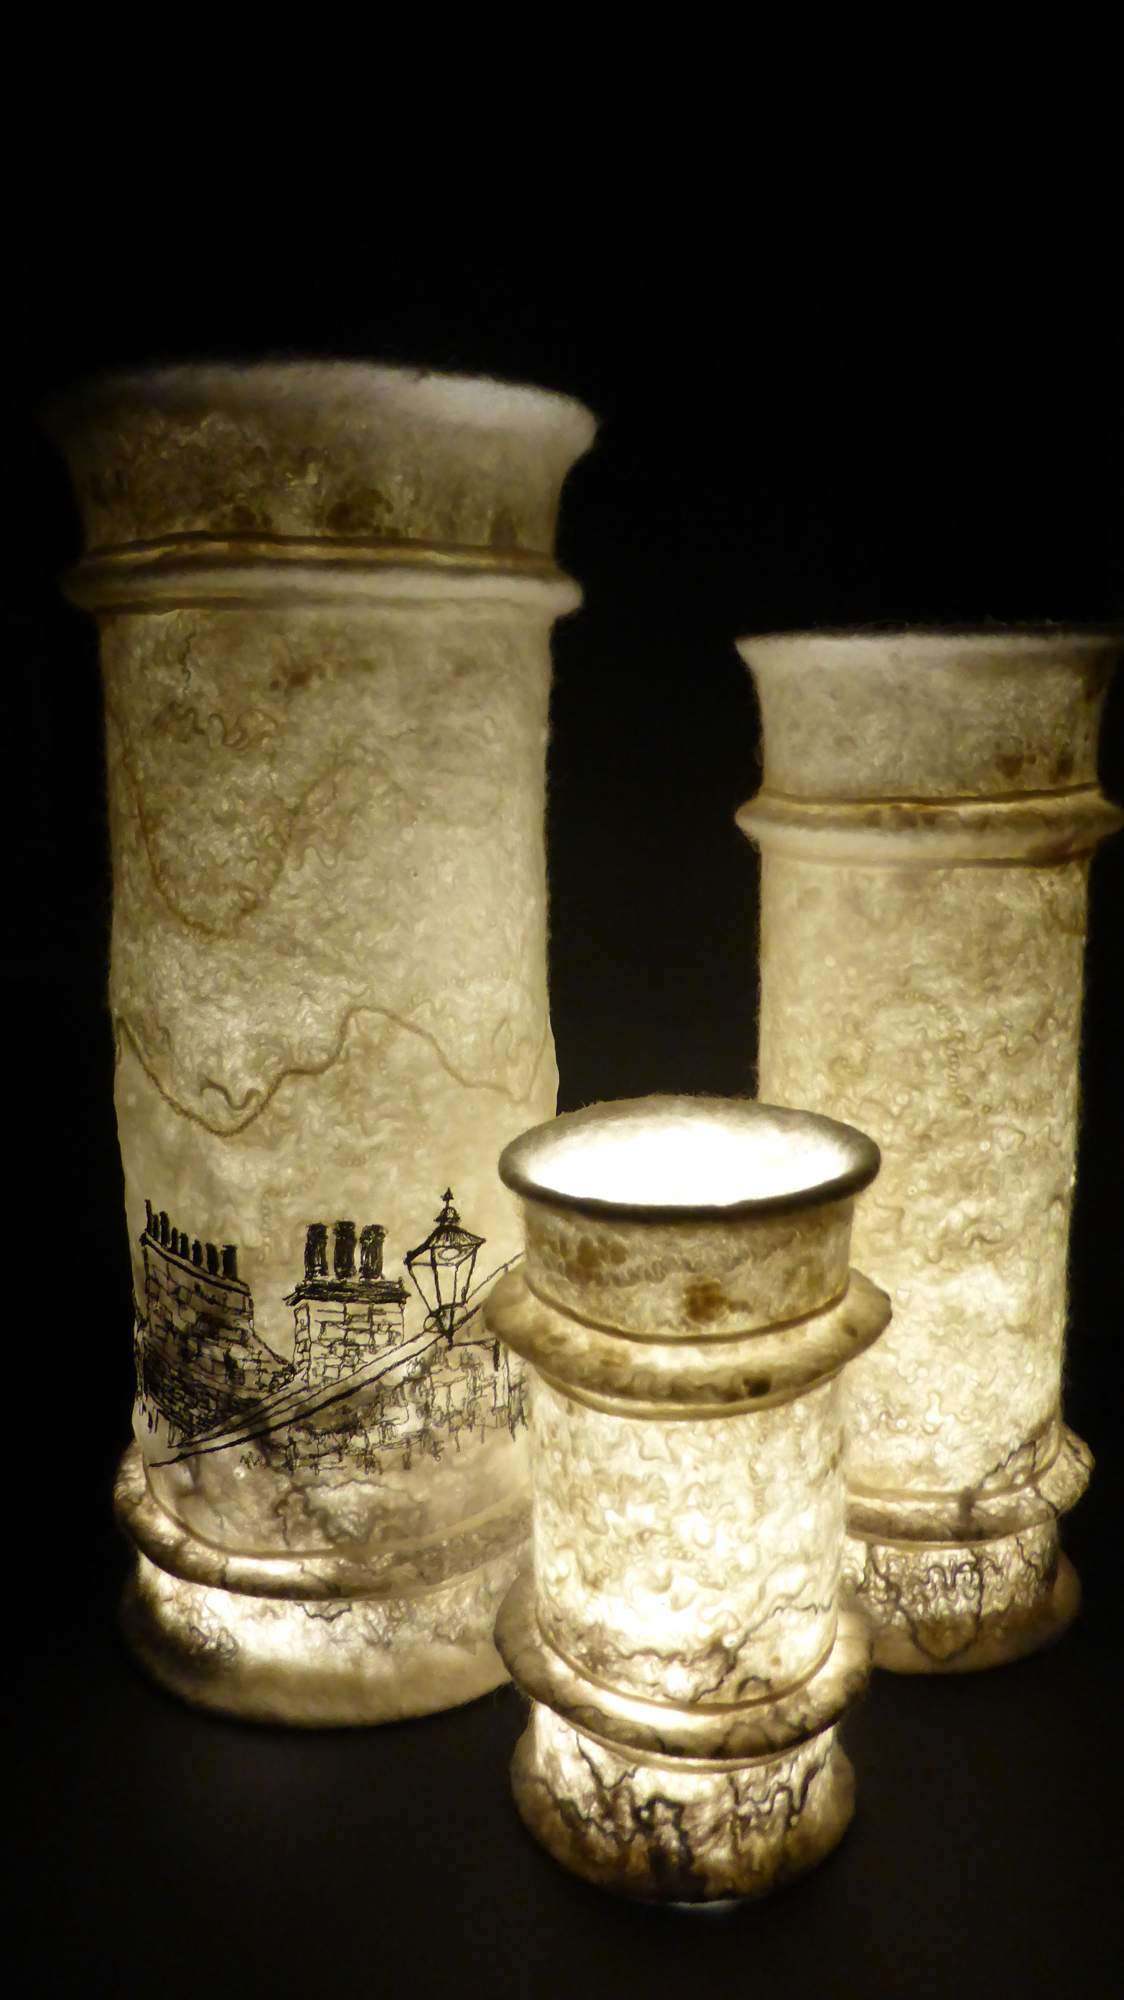 Trio of Chimney Pots by Andrea McCallum